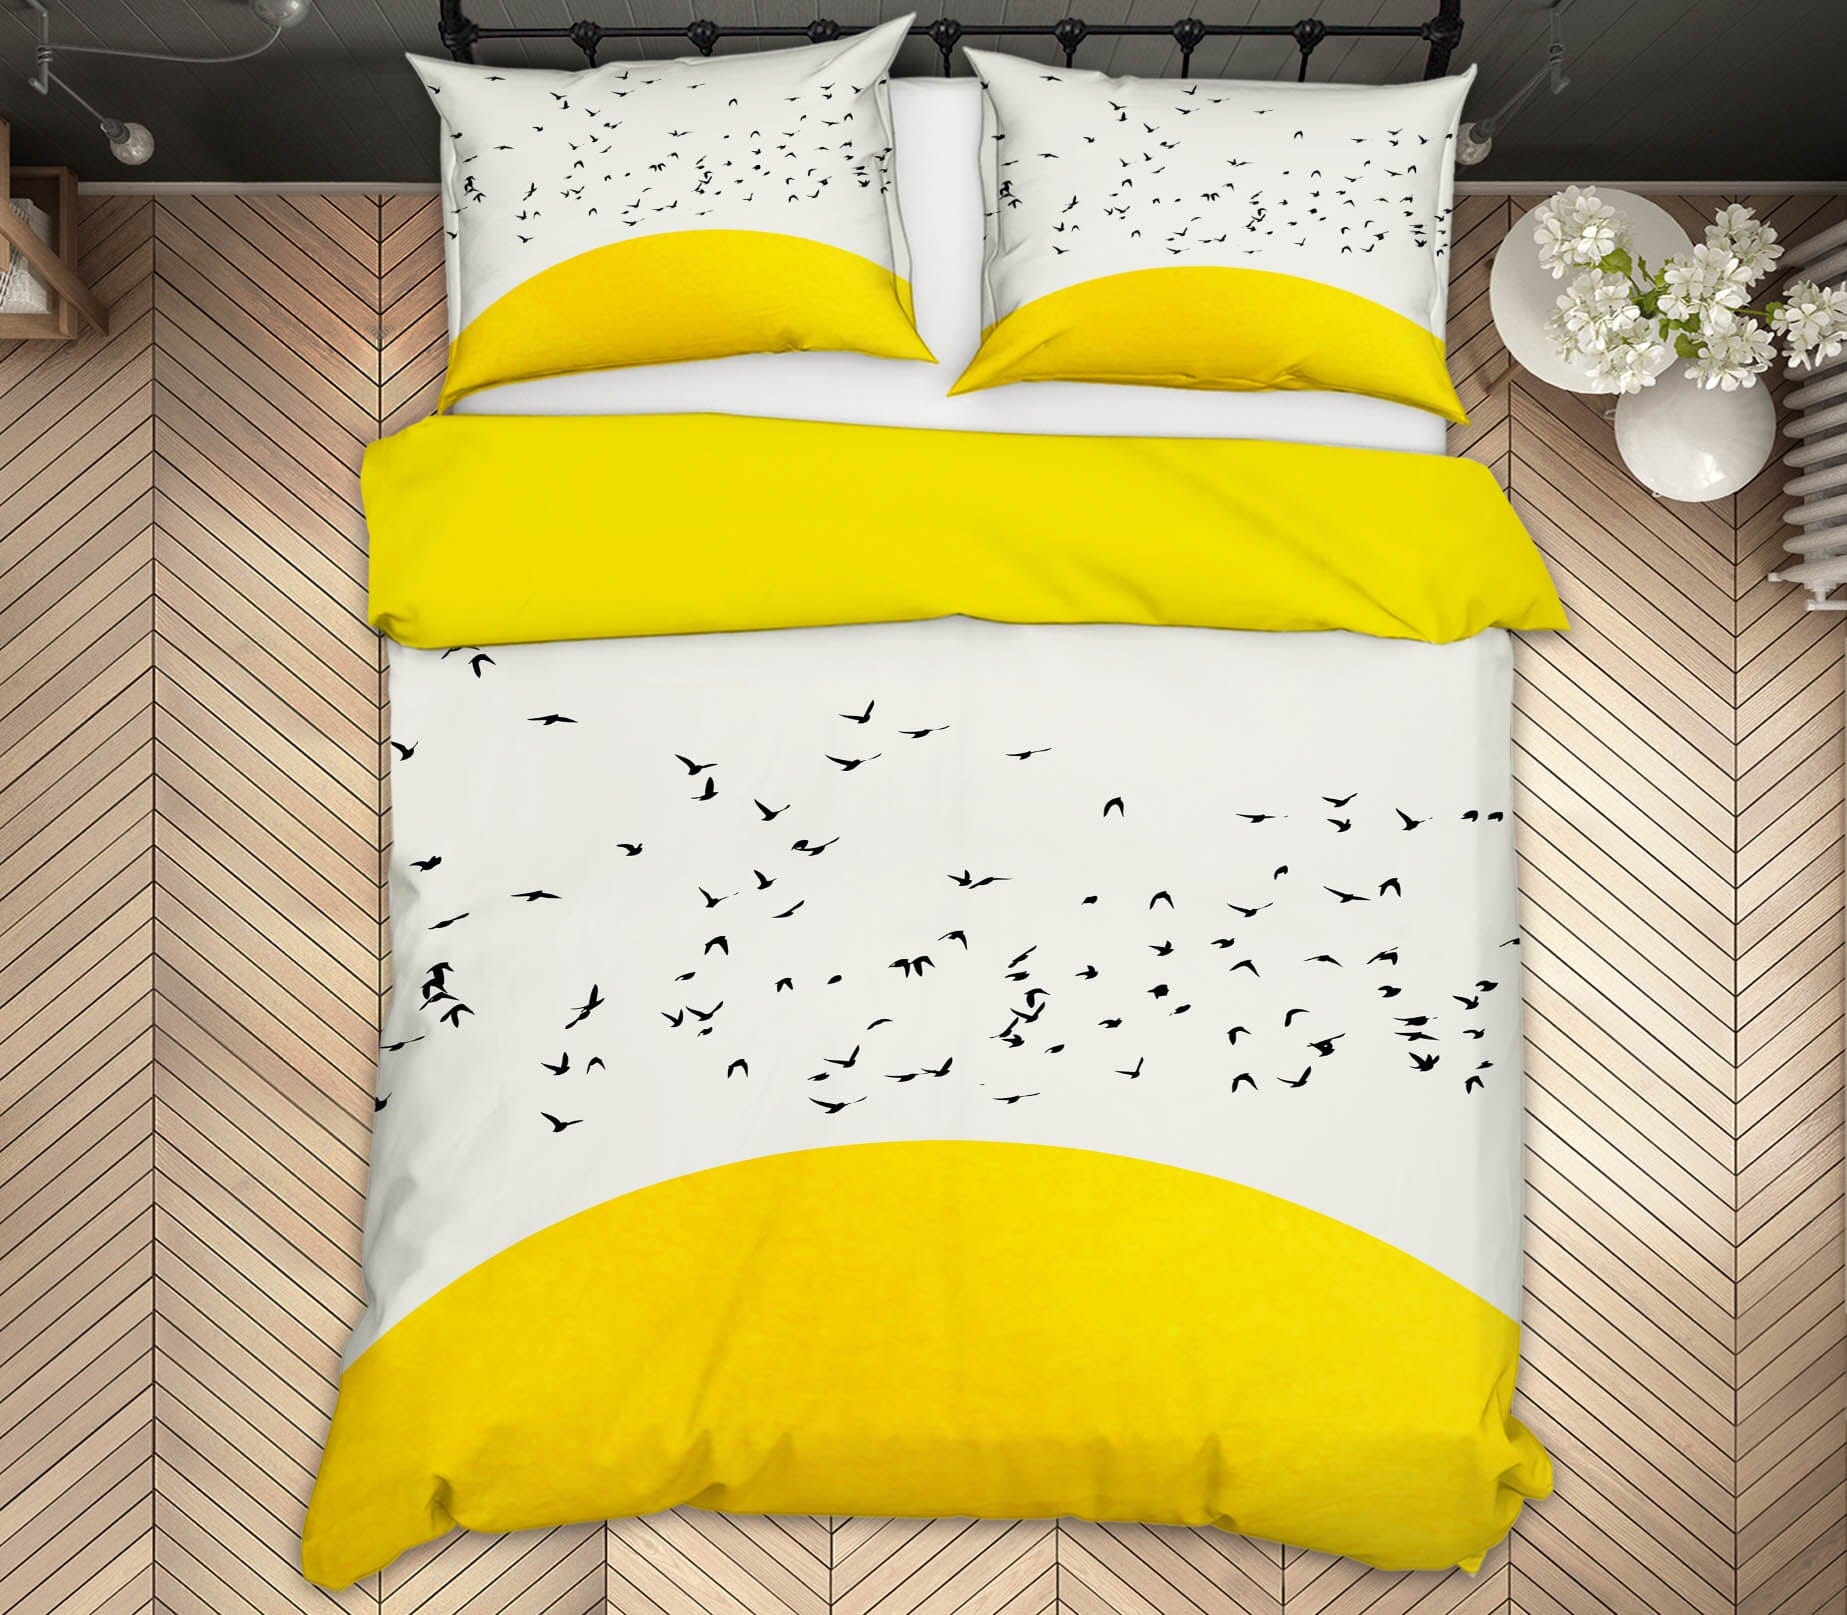 3D White Sky Bird 2018 Boris Draschoff Bedding Bed Pillowcases Quilt Quiet Covers AJ Creativity Home 